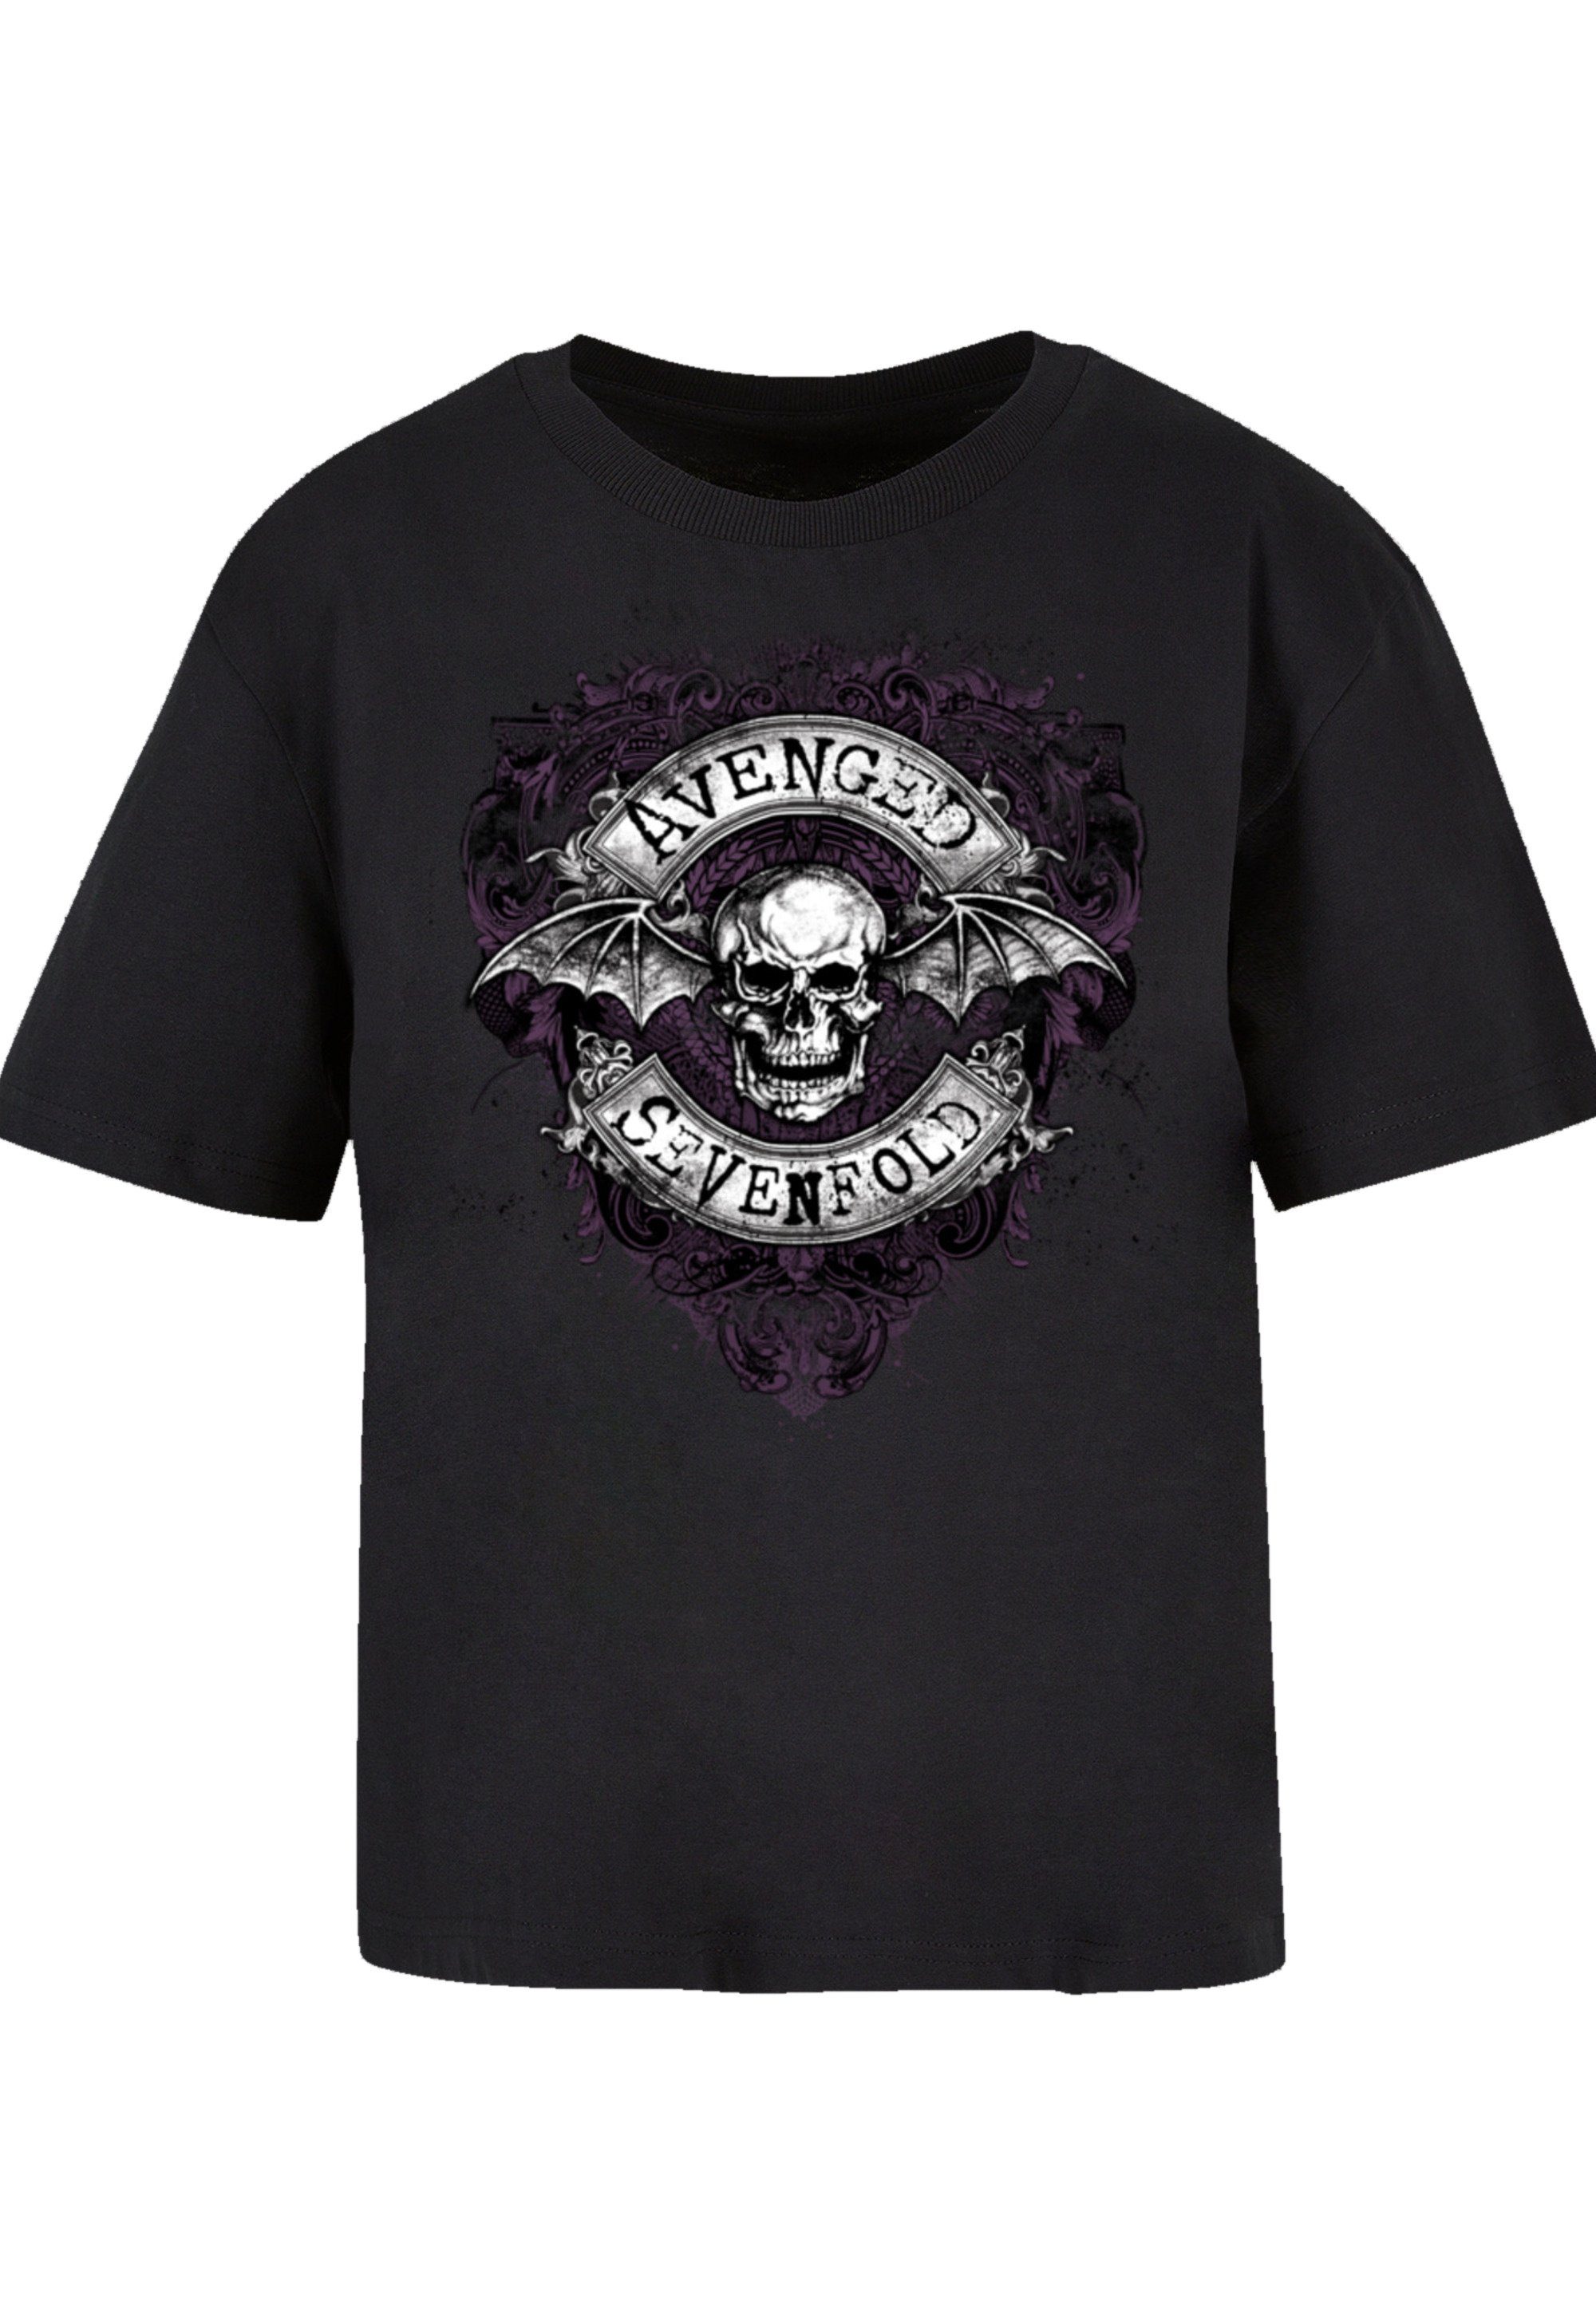 Qualität, Bat Flourish Sevenfold Avenged Premium Rock-Musik Band, Rock Band Metal T-Shirt F4NT4STIC